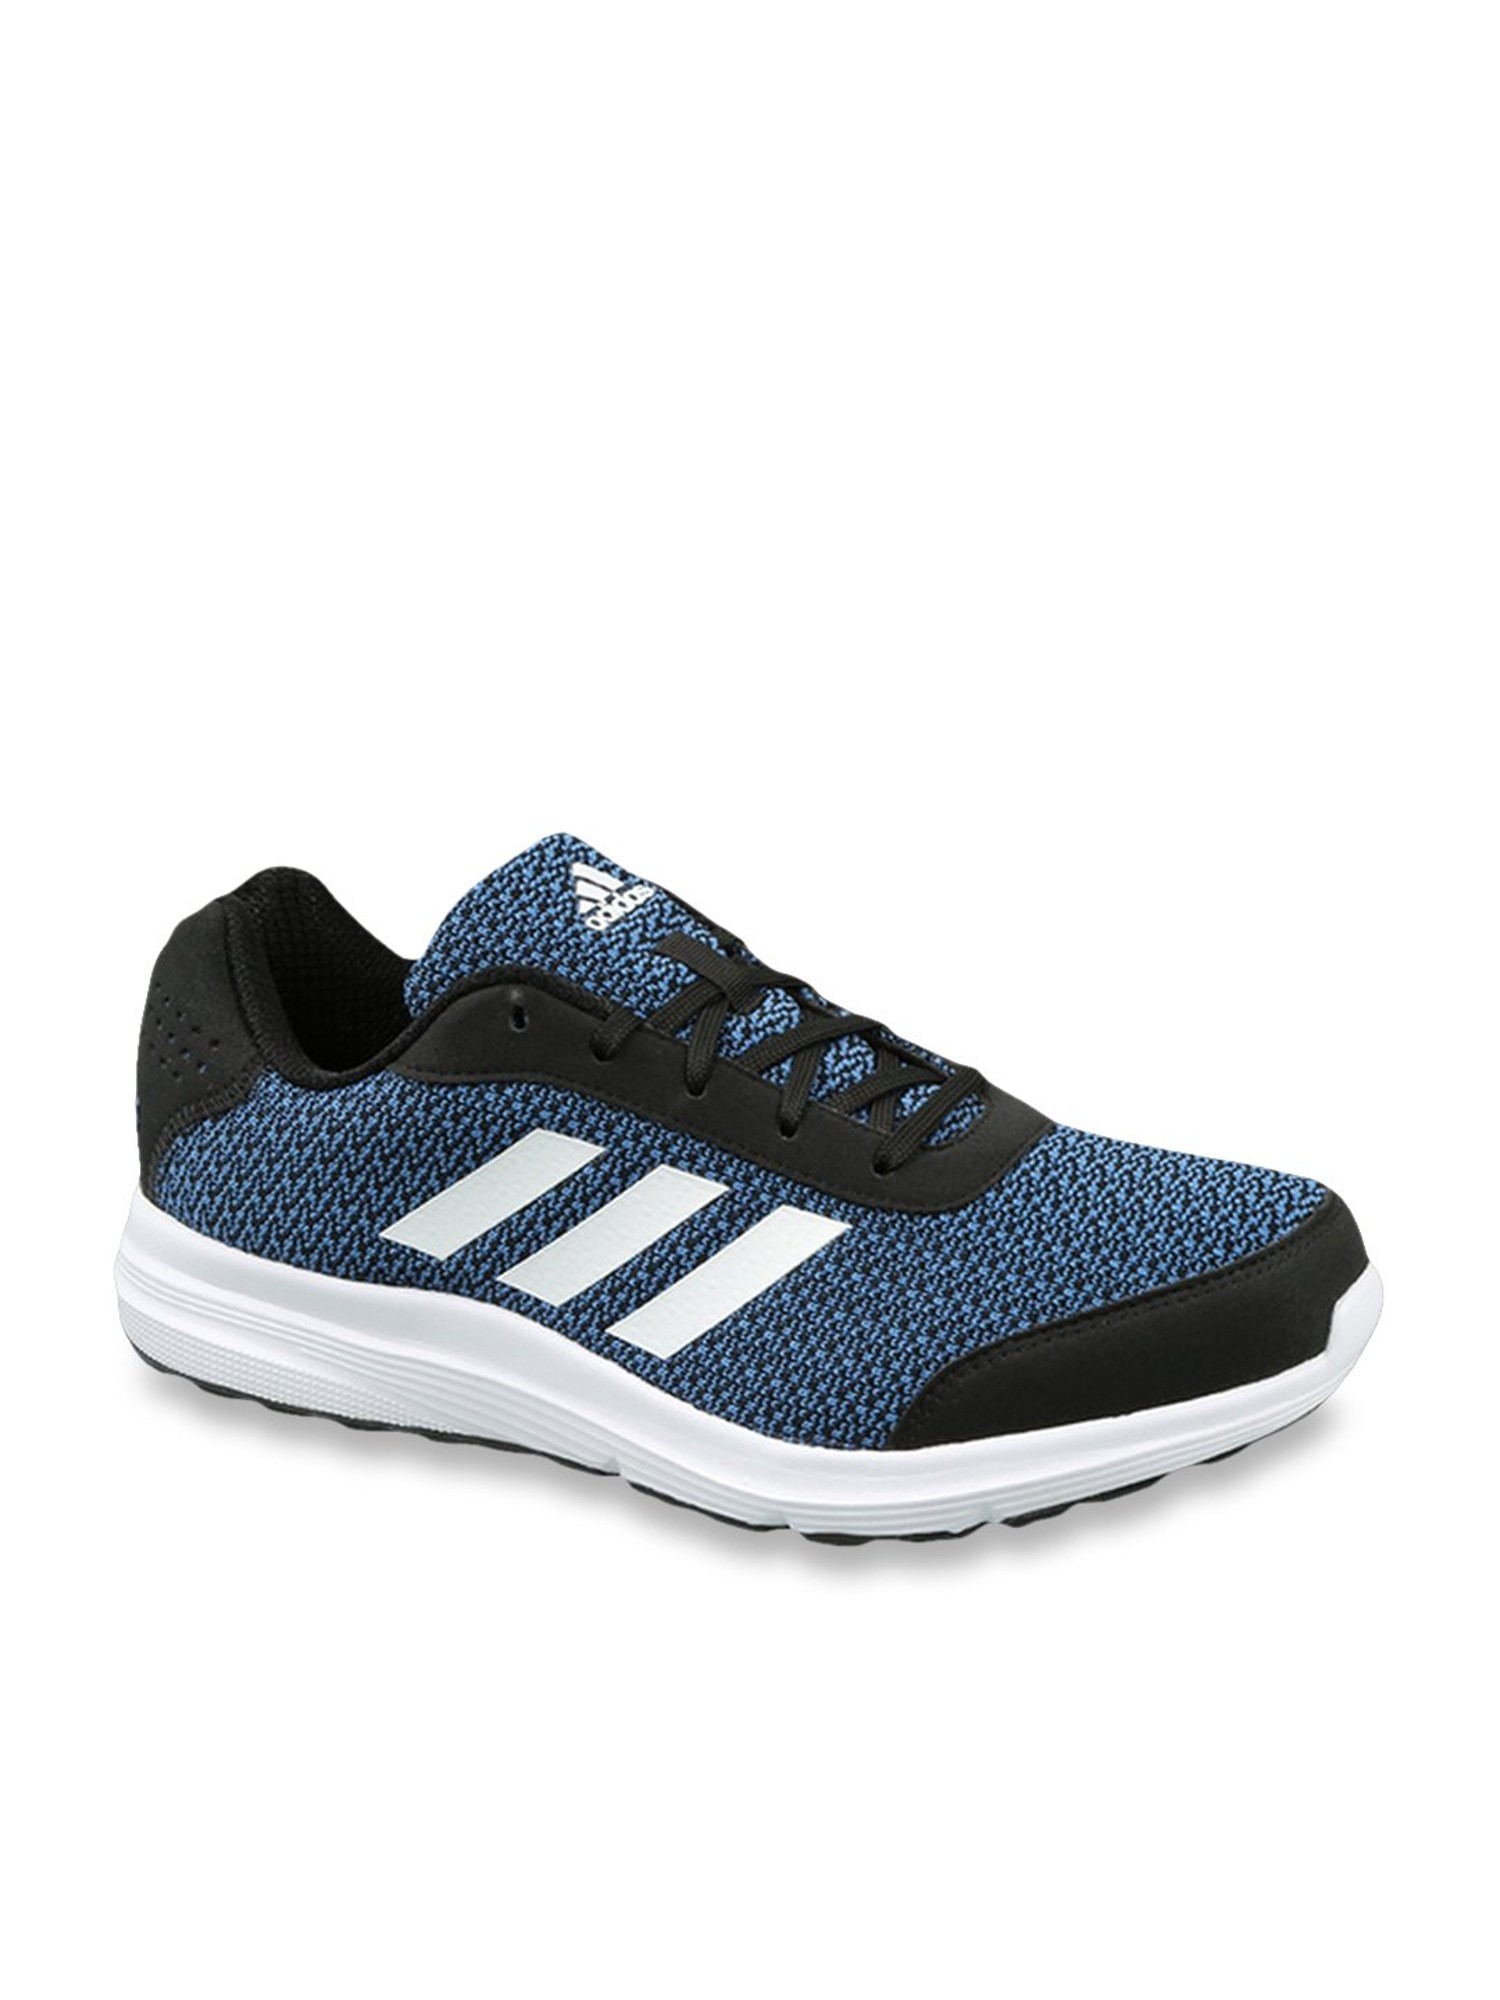 Adidas Nebular 1.0 Blue Running Shoes 